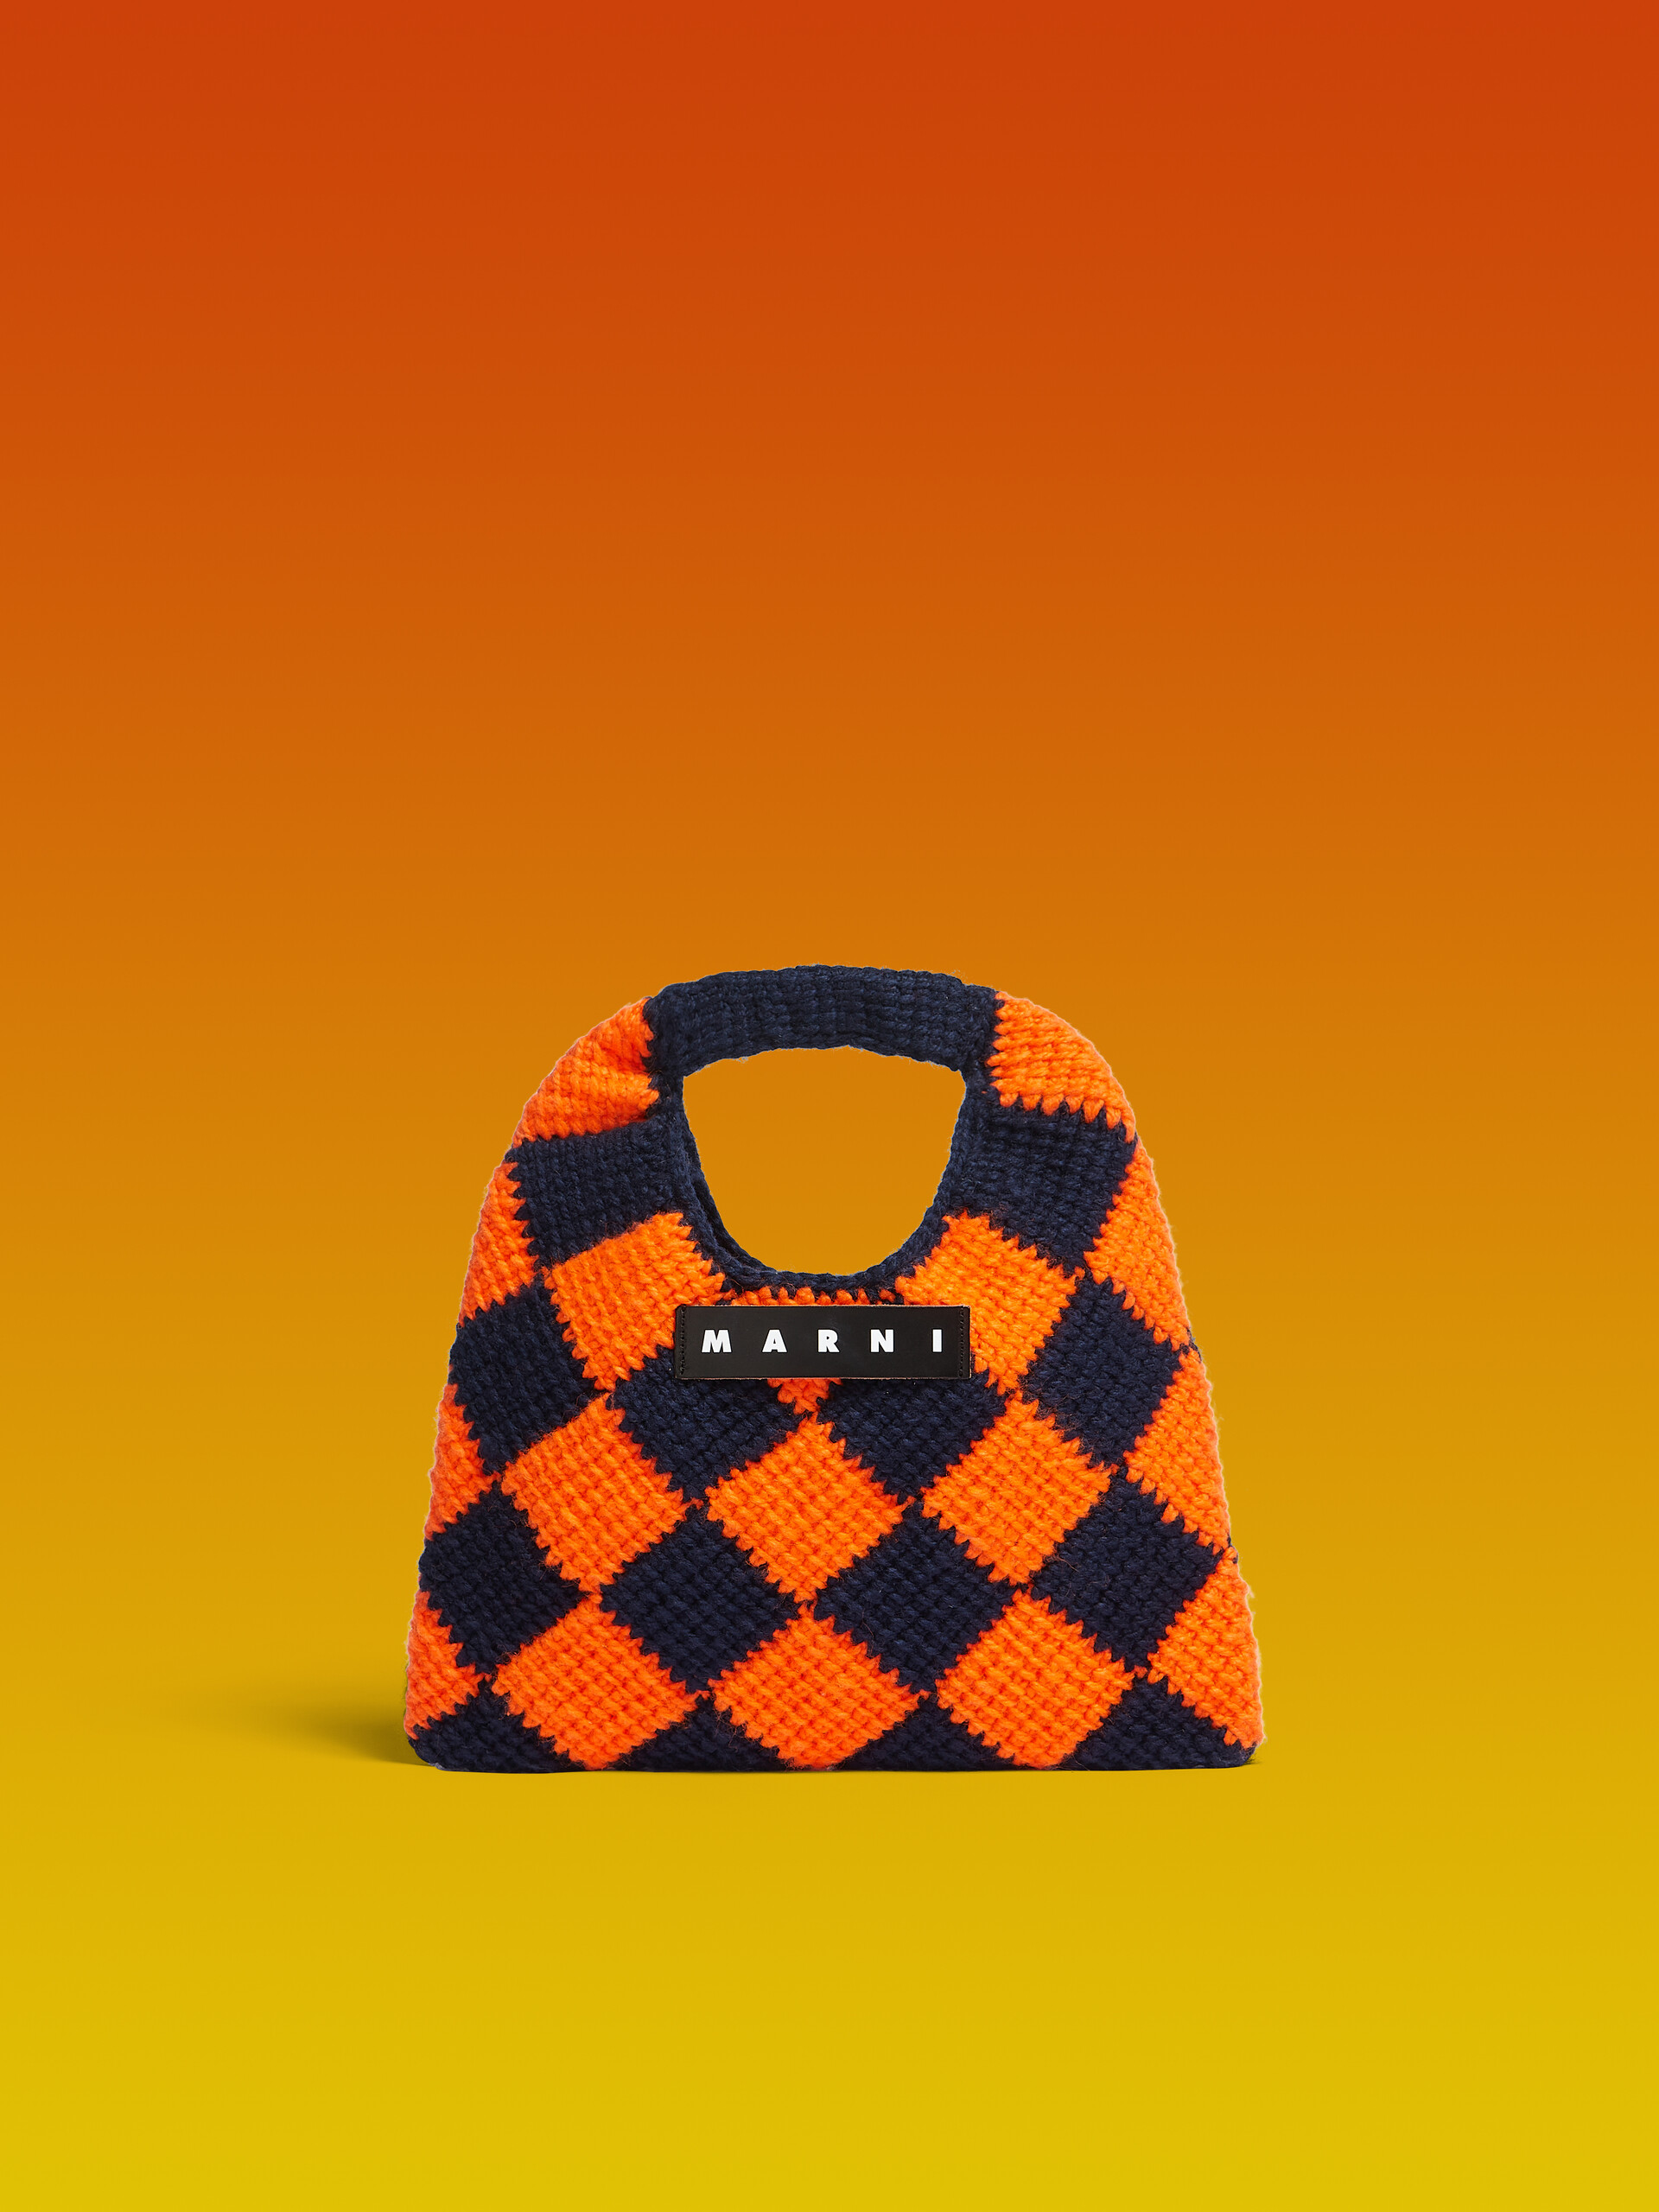 MARNI MARKET DIAMOND MINI bag in orange and blue tech wool - Shopping Bags - Image 1